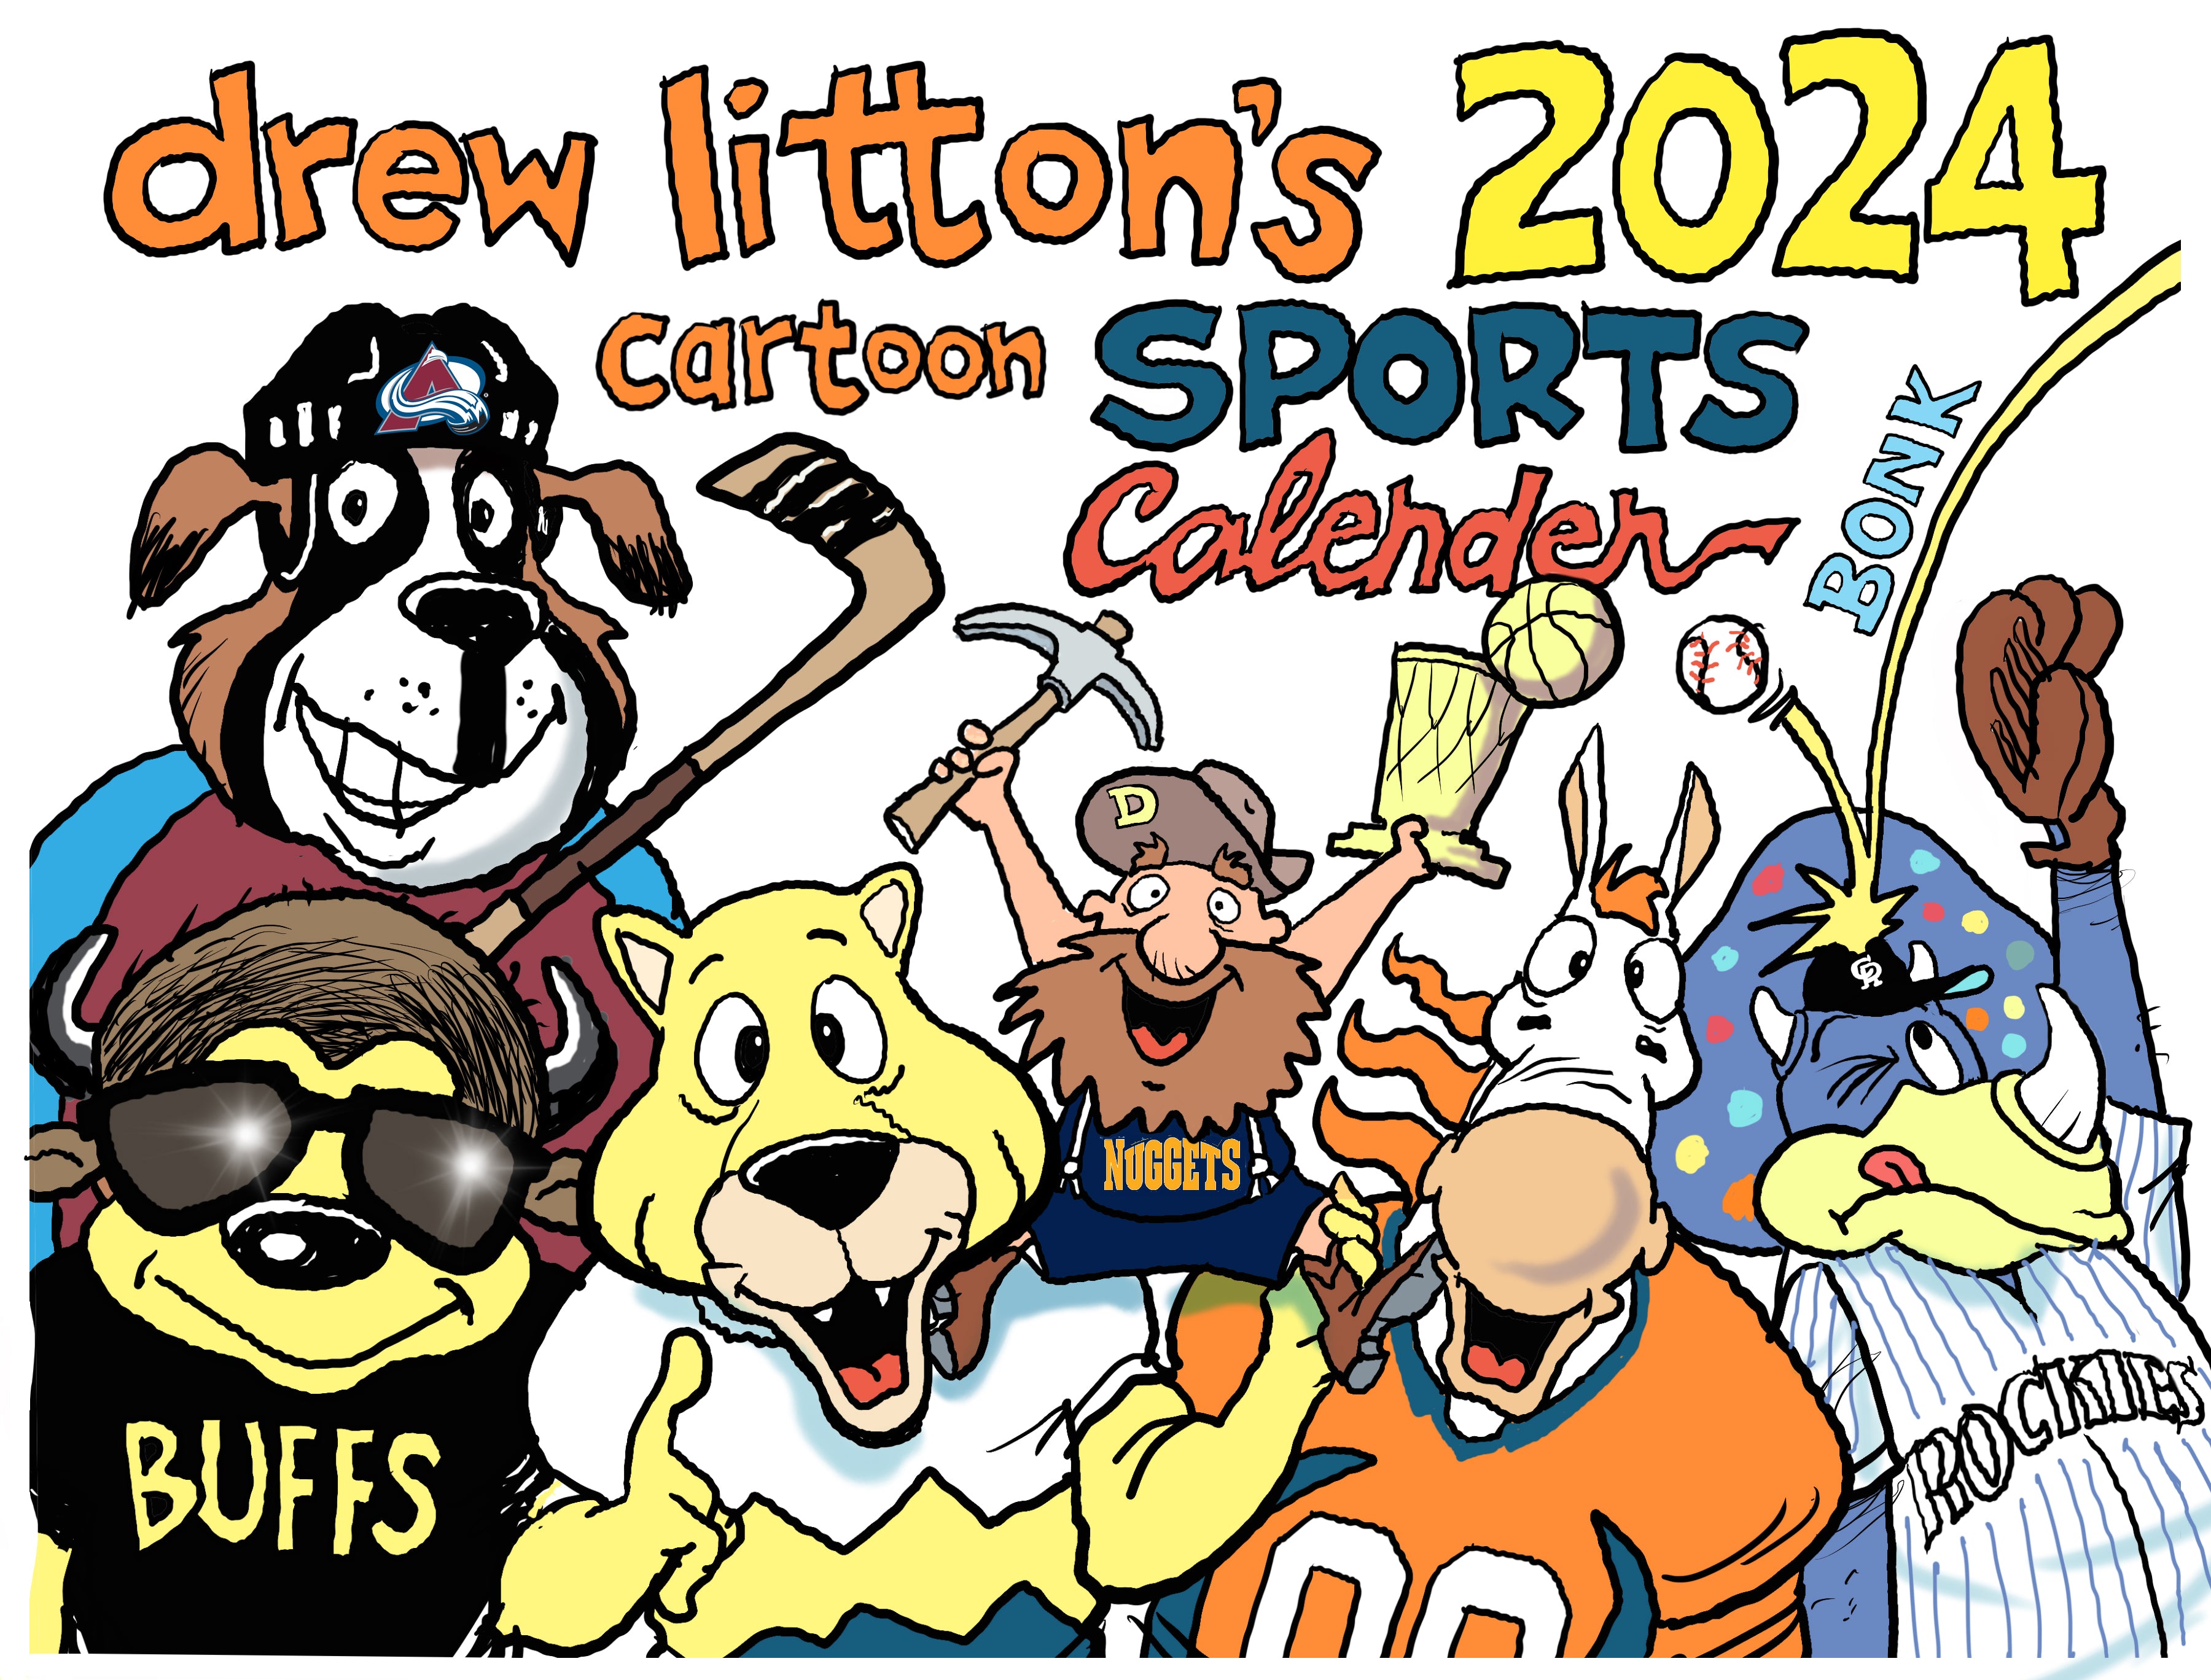 Drew Litton's 2024 Sports Cartoons Calendar